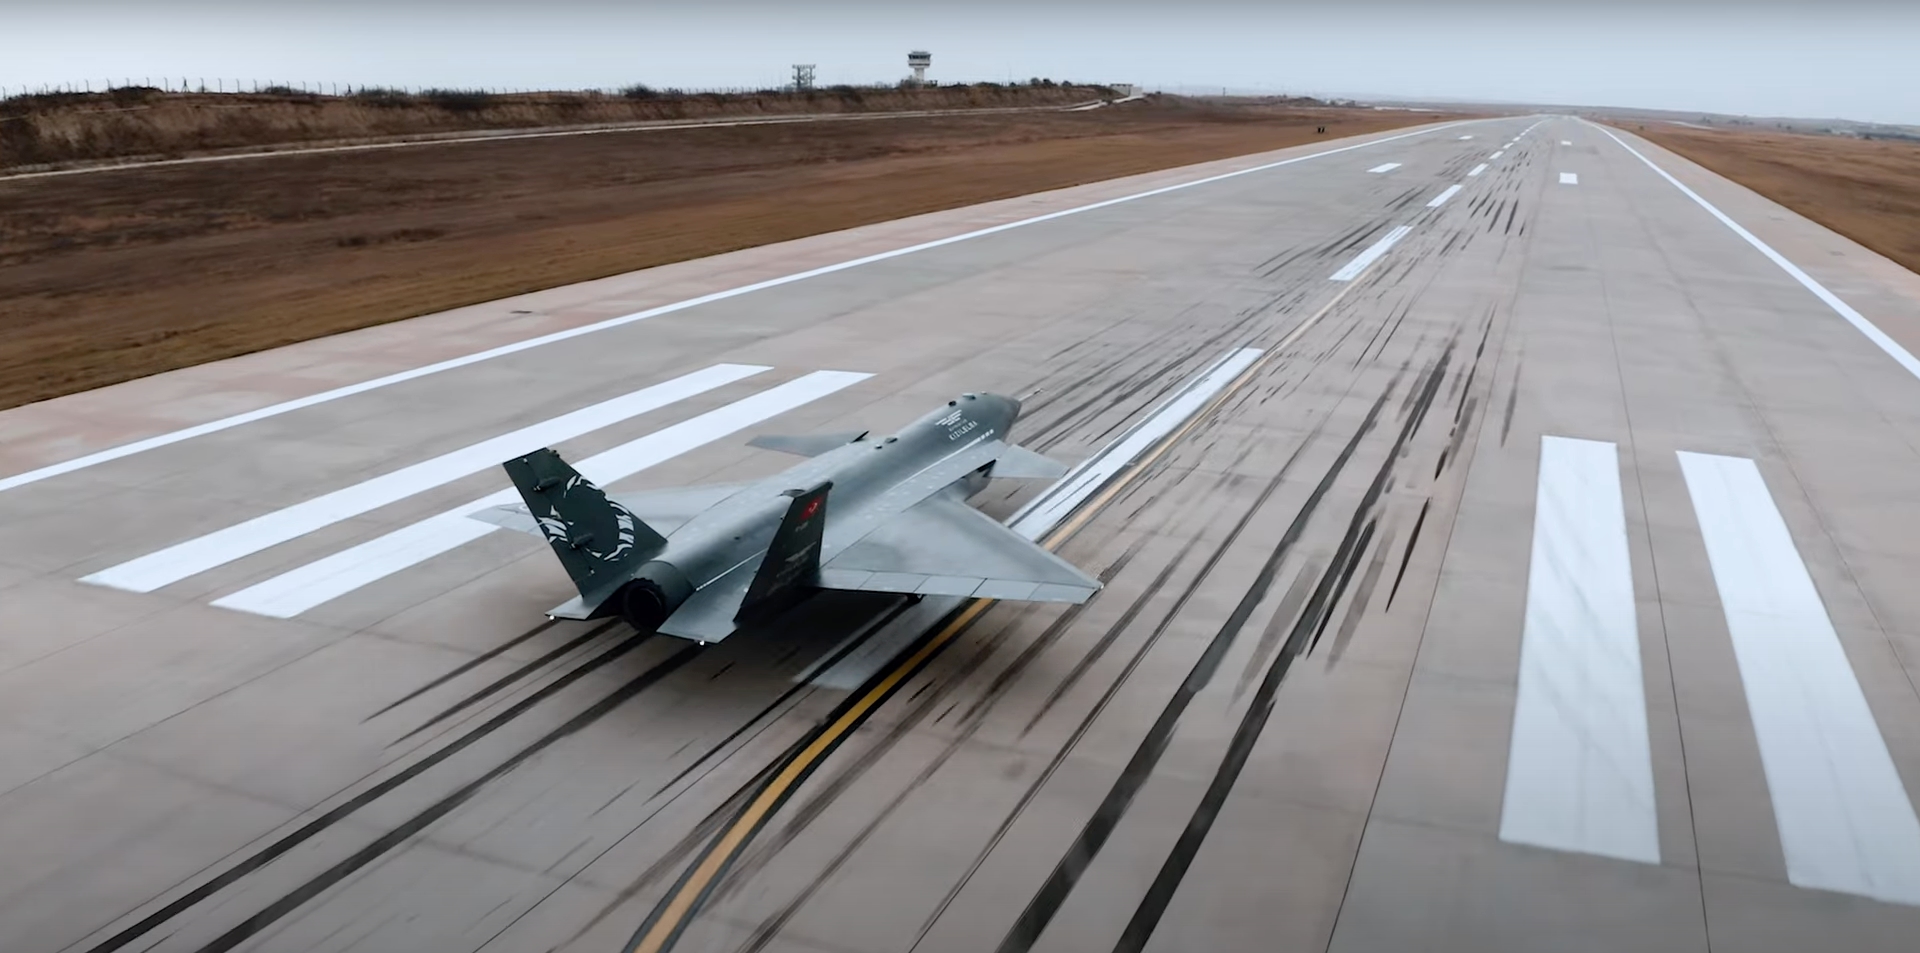 Bayraktar tested the Kizilelma jet UAV on the runway